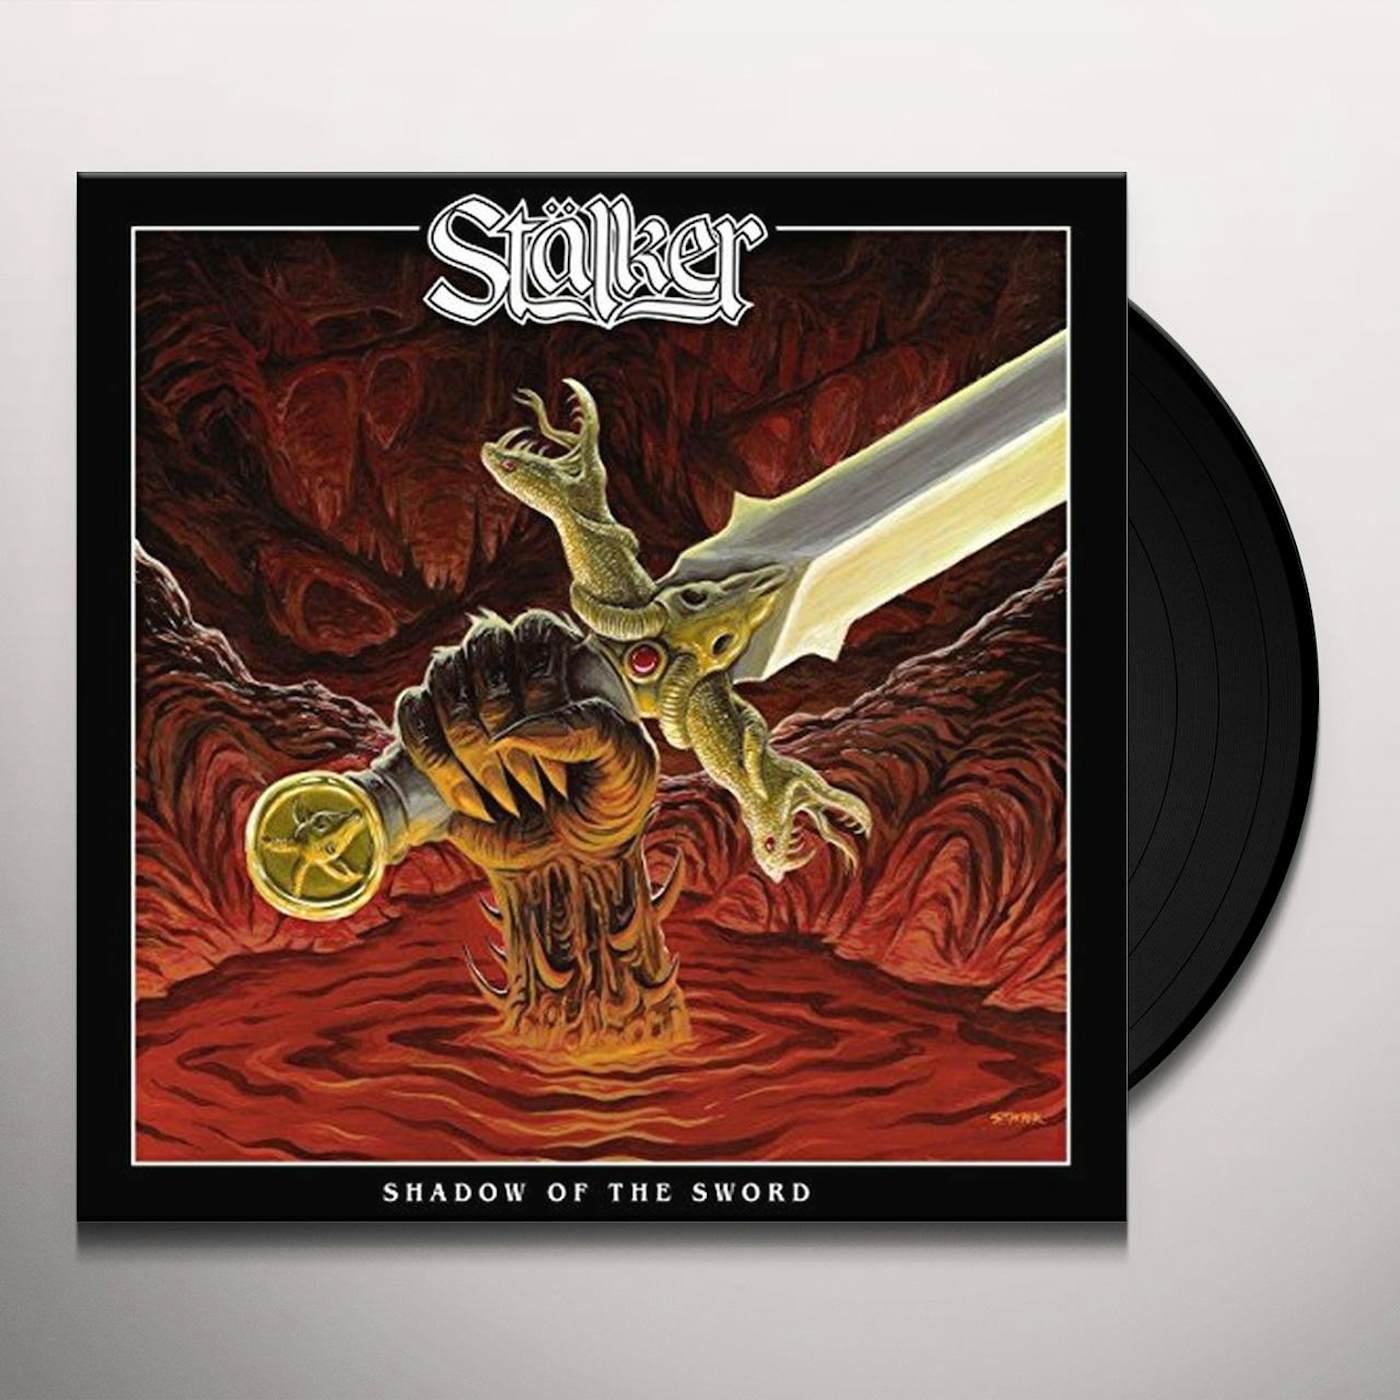 Stalker Shadow Of The Sword Vinyl Record